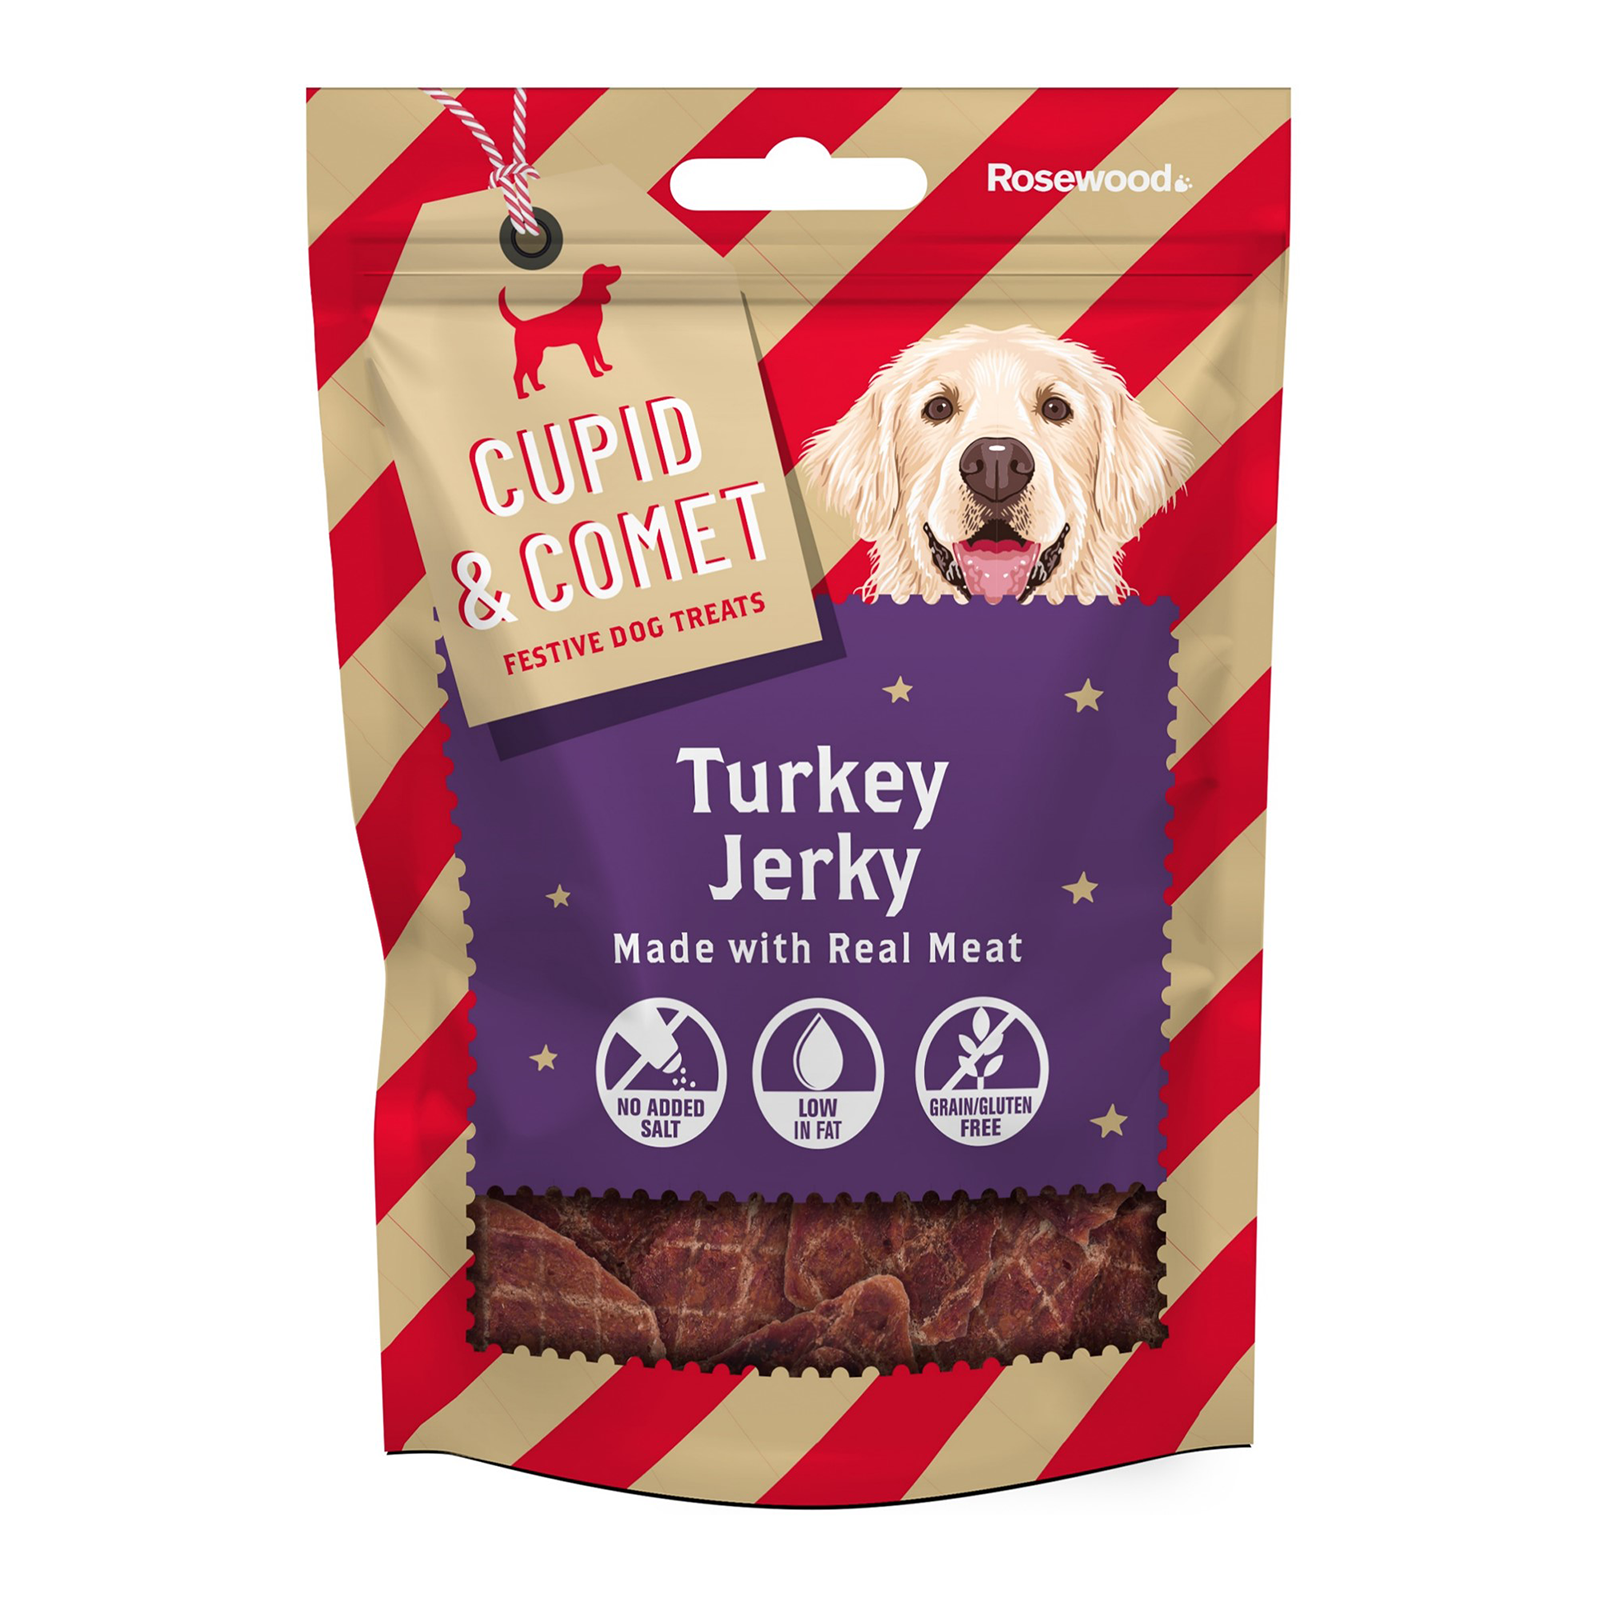 Cupid & Comet Xmas Dog Treat Turkey Jerky